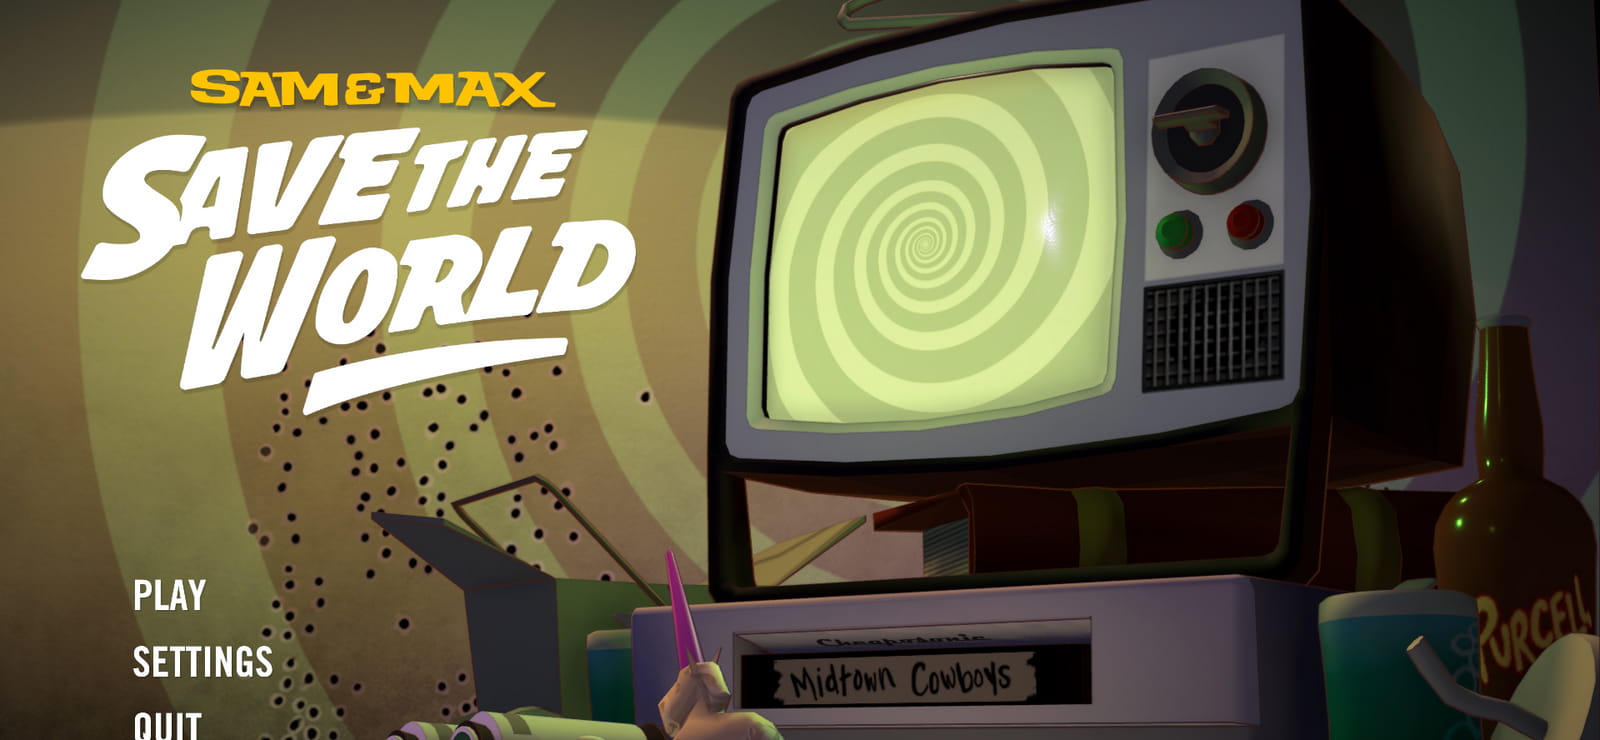 Sam & Max Save The World